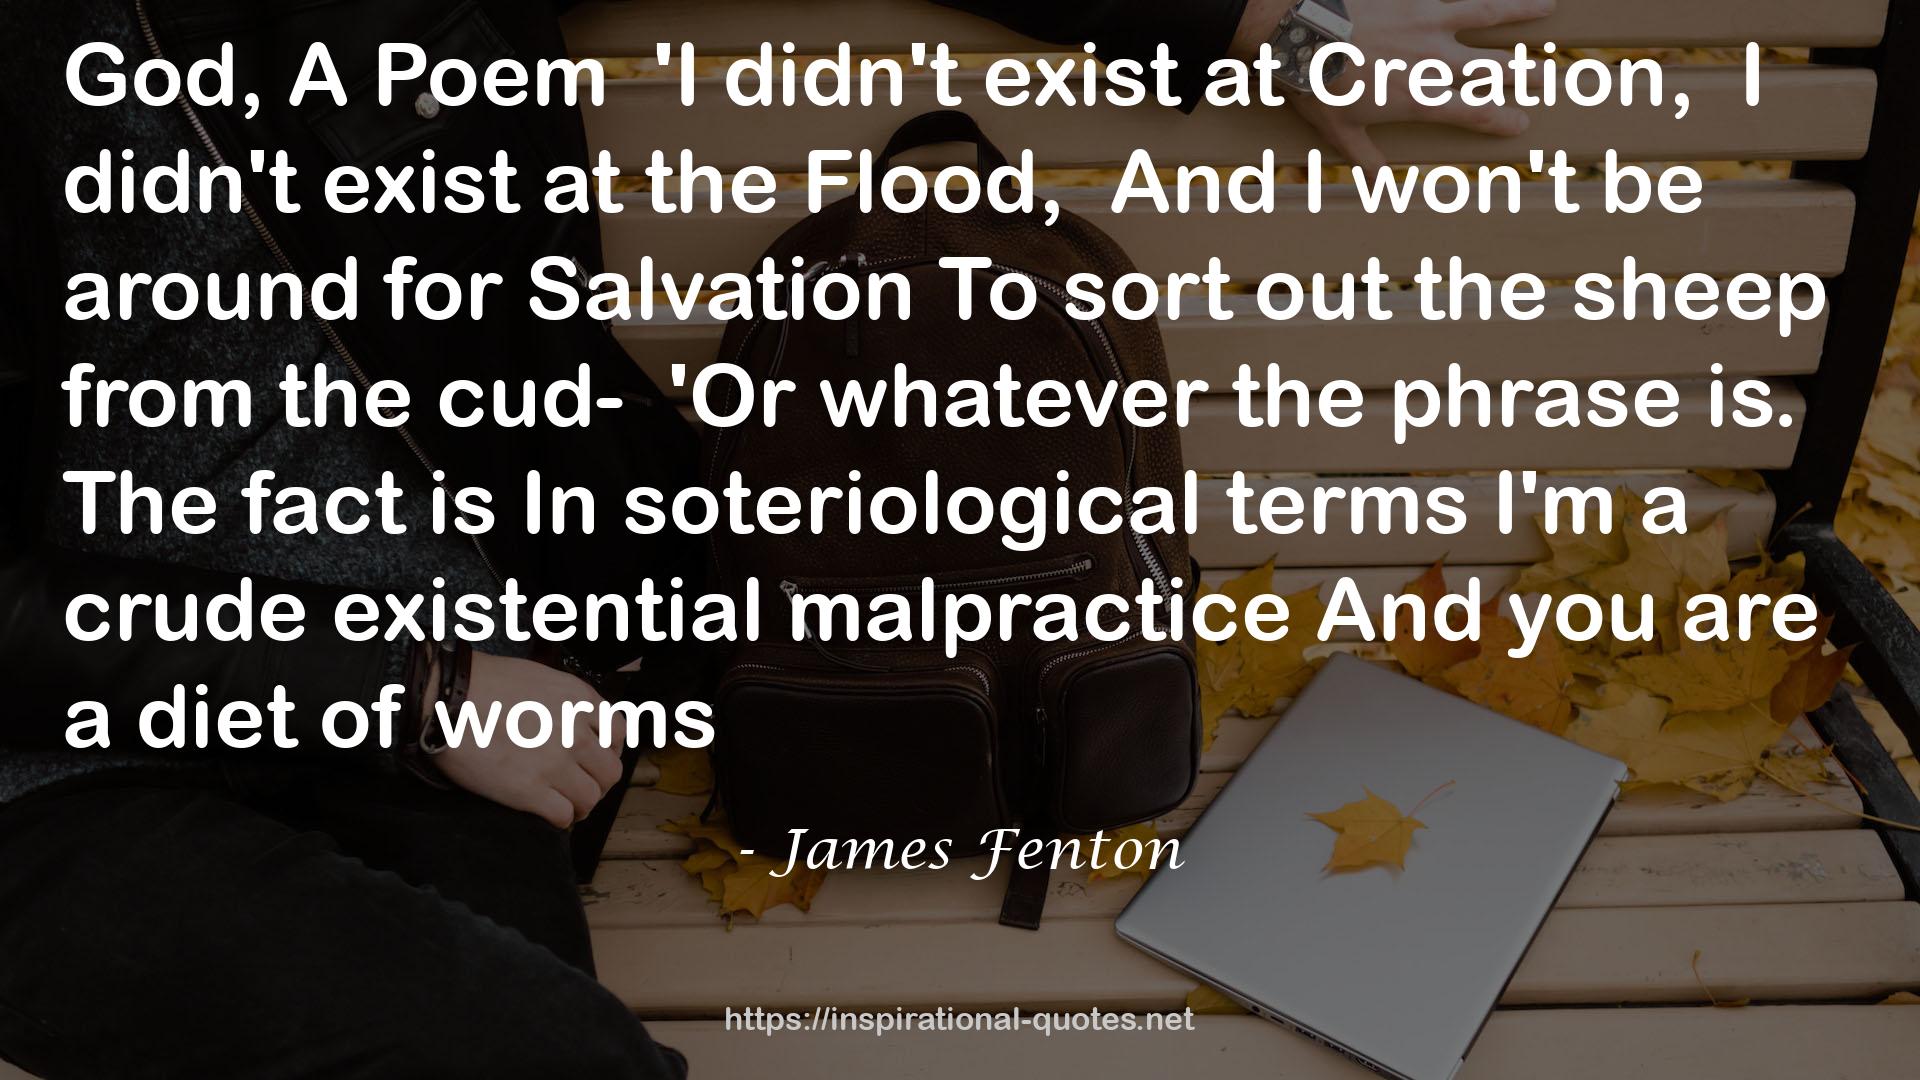 James Fenton QUOTES